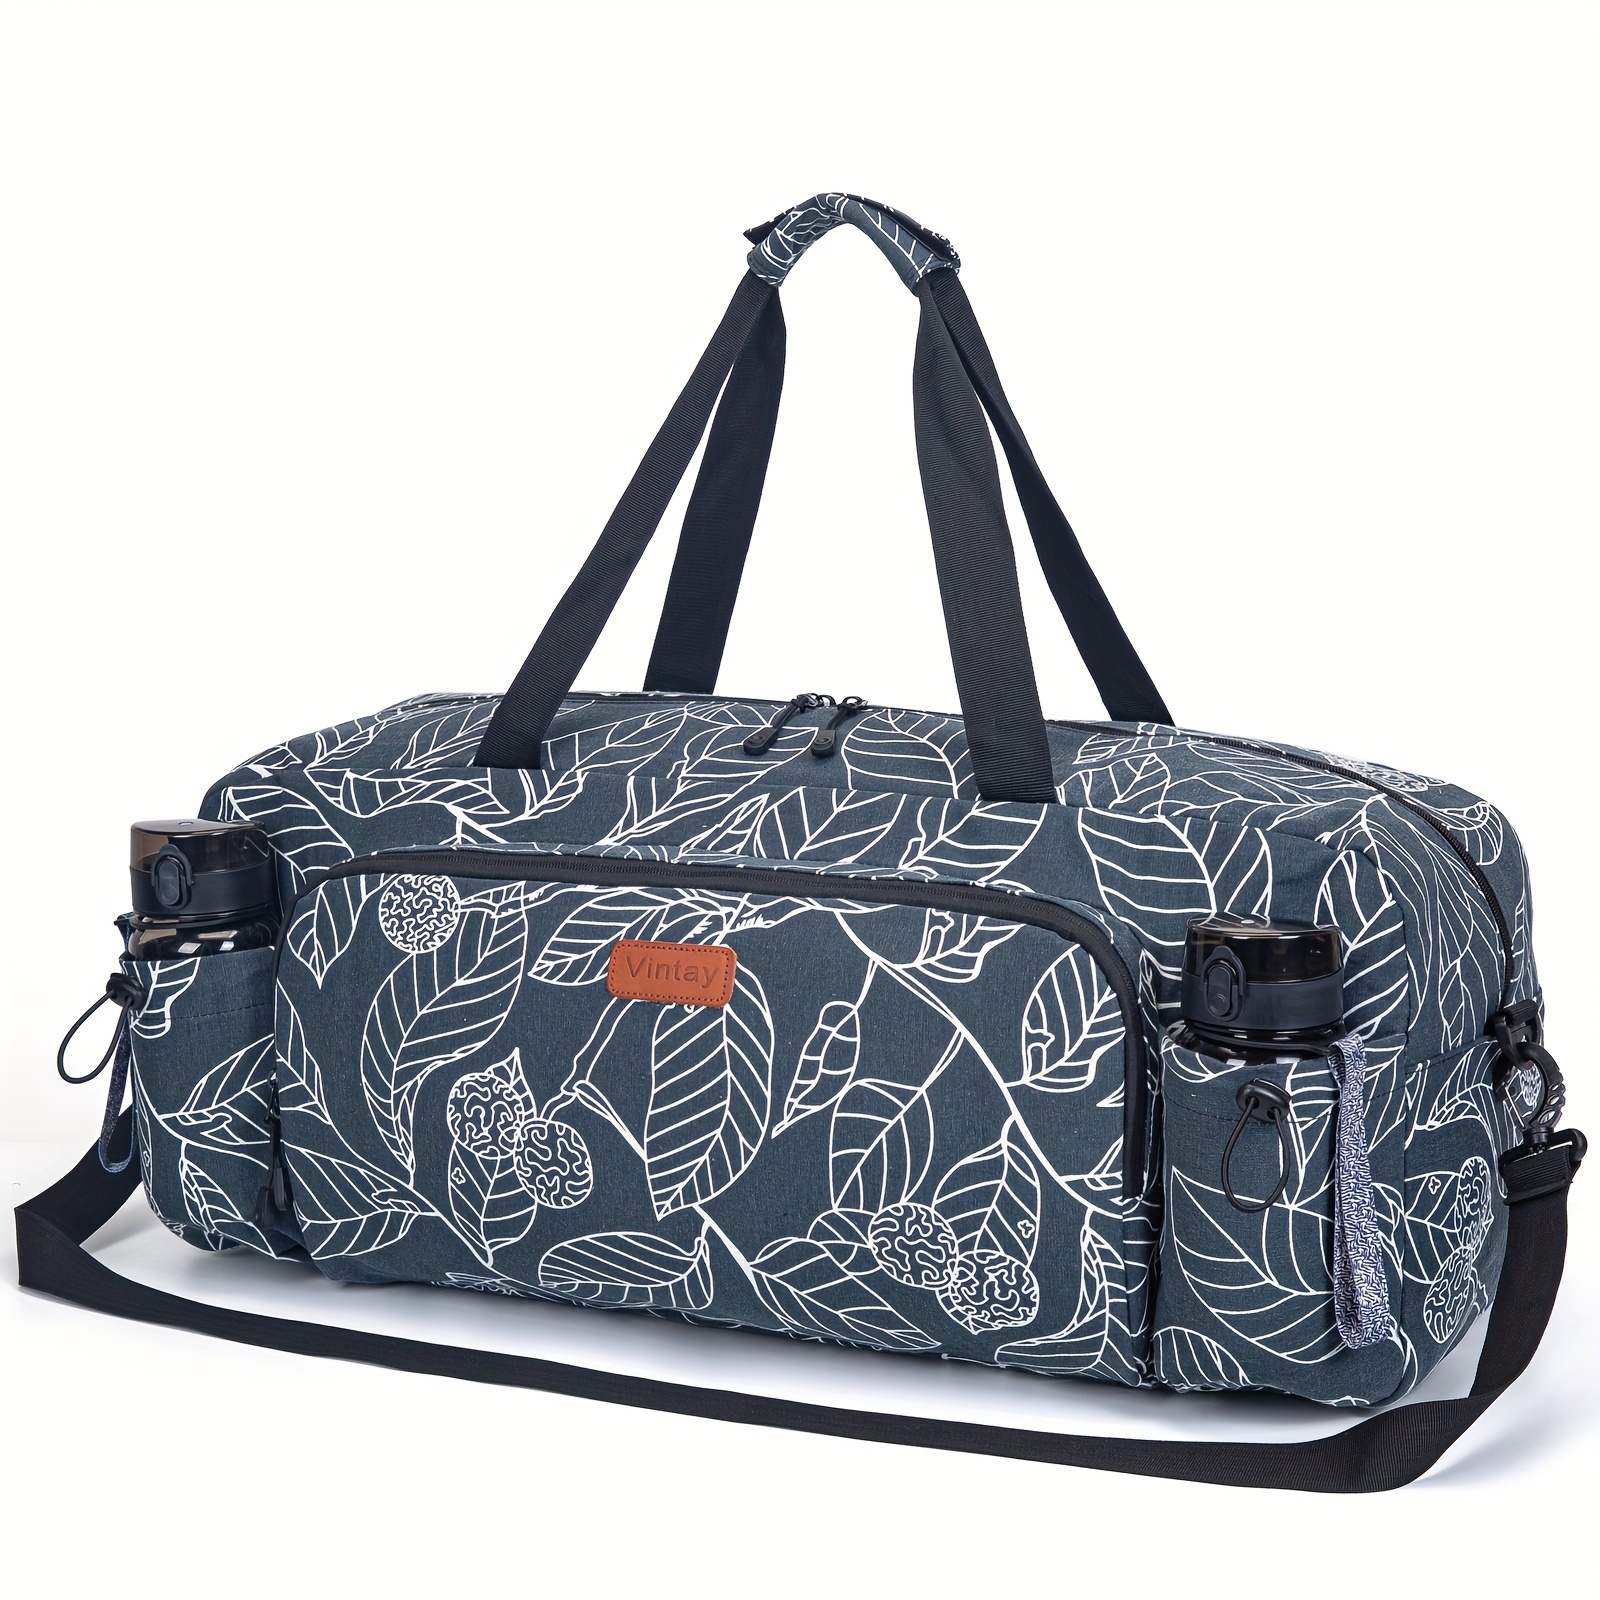 Dropship Multifunction Yoga Mat Tote Bag: Lightweight, Durable